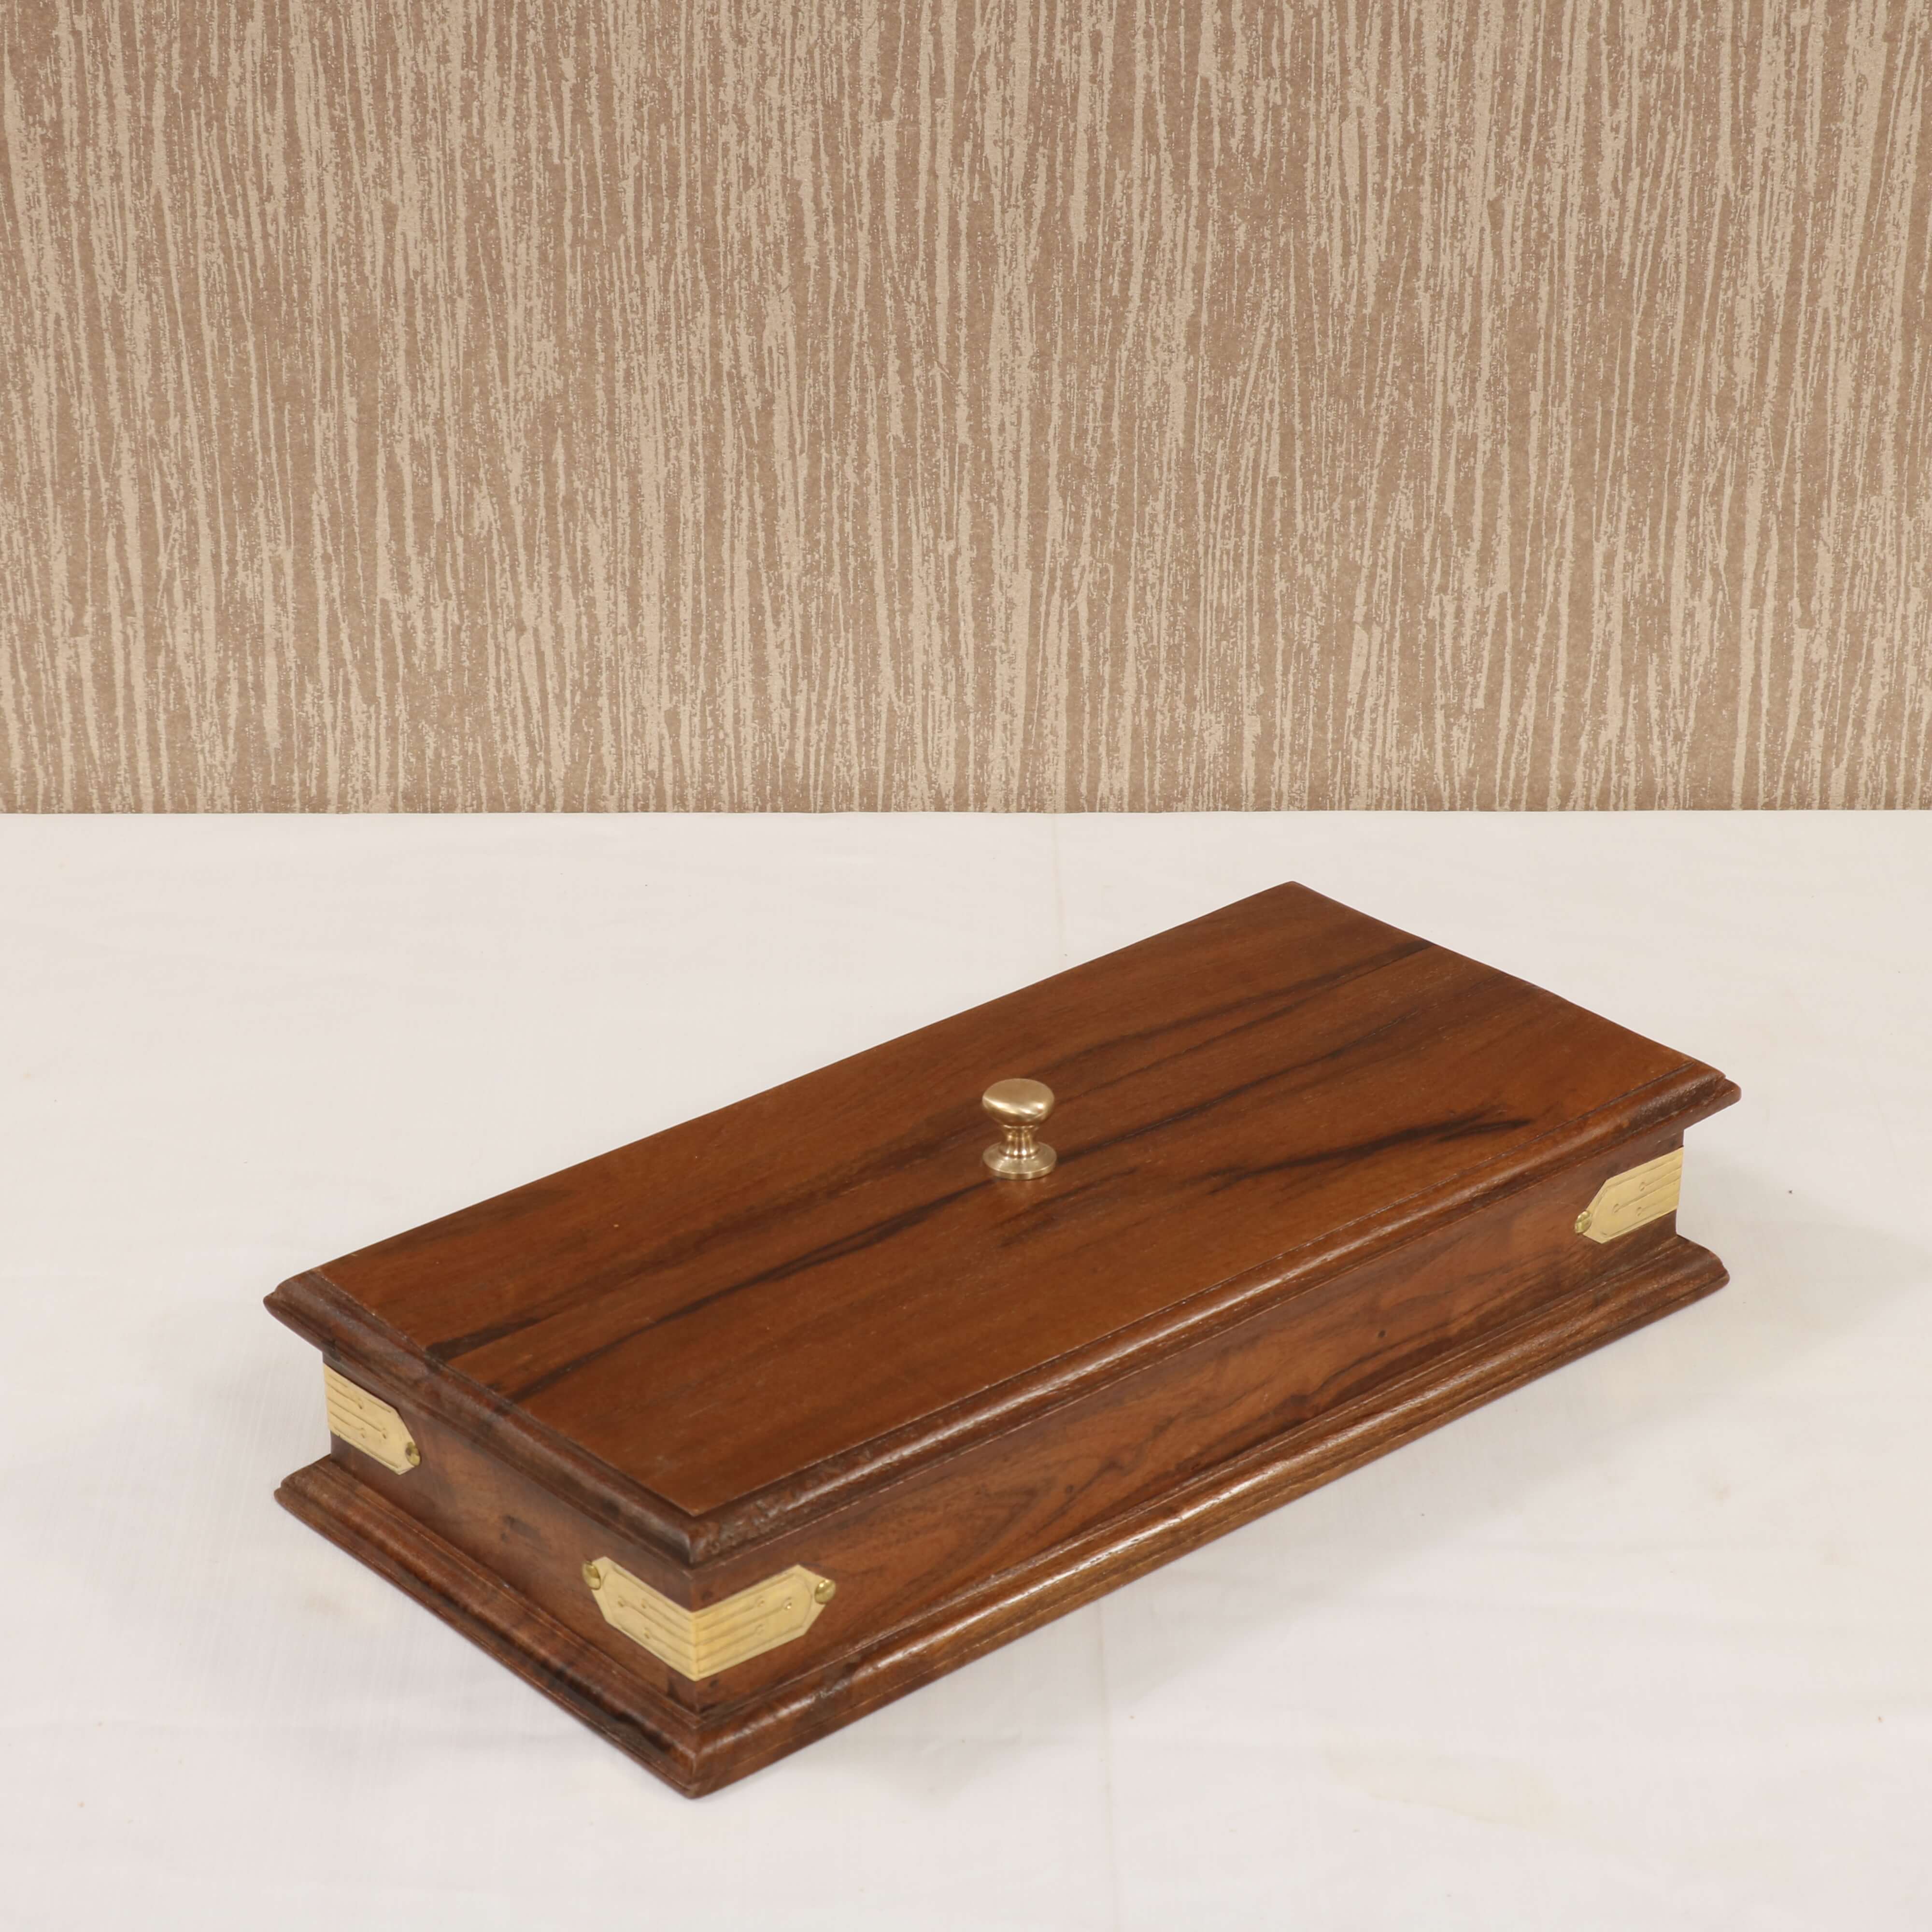 Rustic Wooden Box Wooden Box